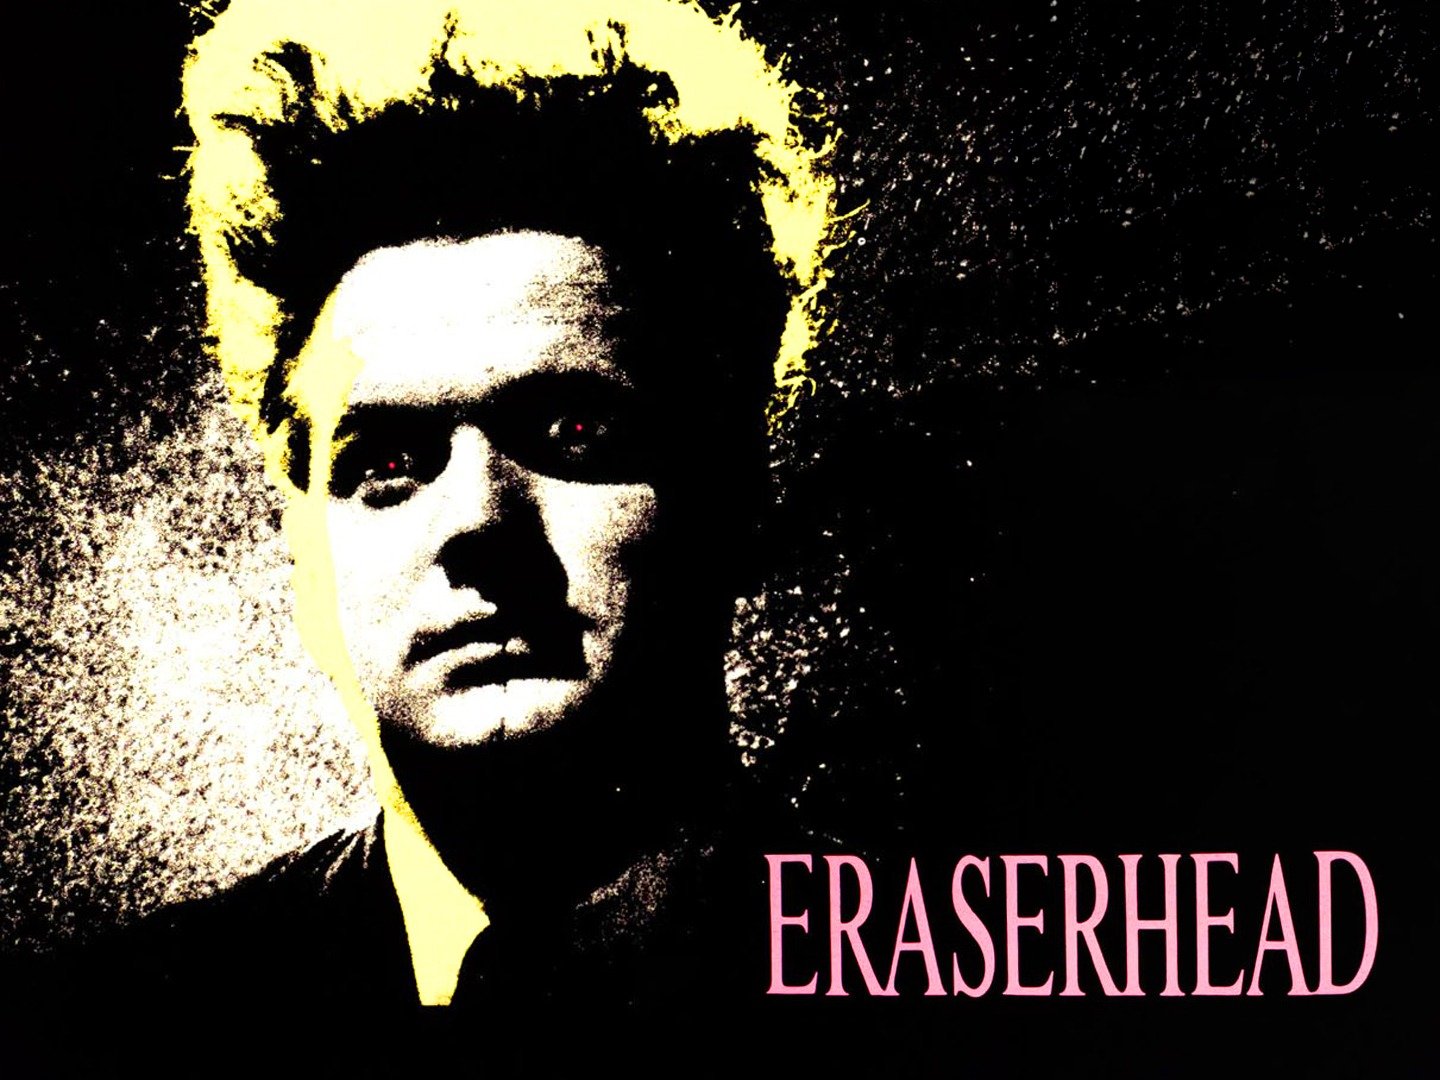 Eraserhead: Trailer 1 - Trailers & Videos - Rotten Tomatoes